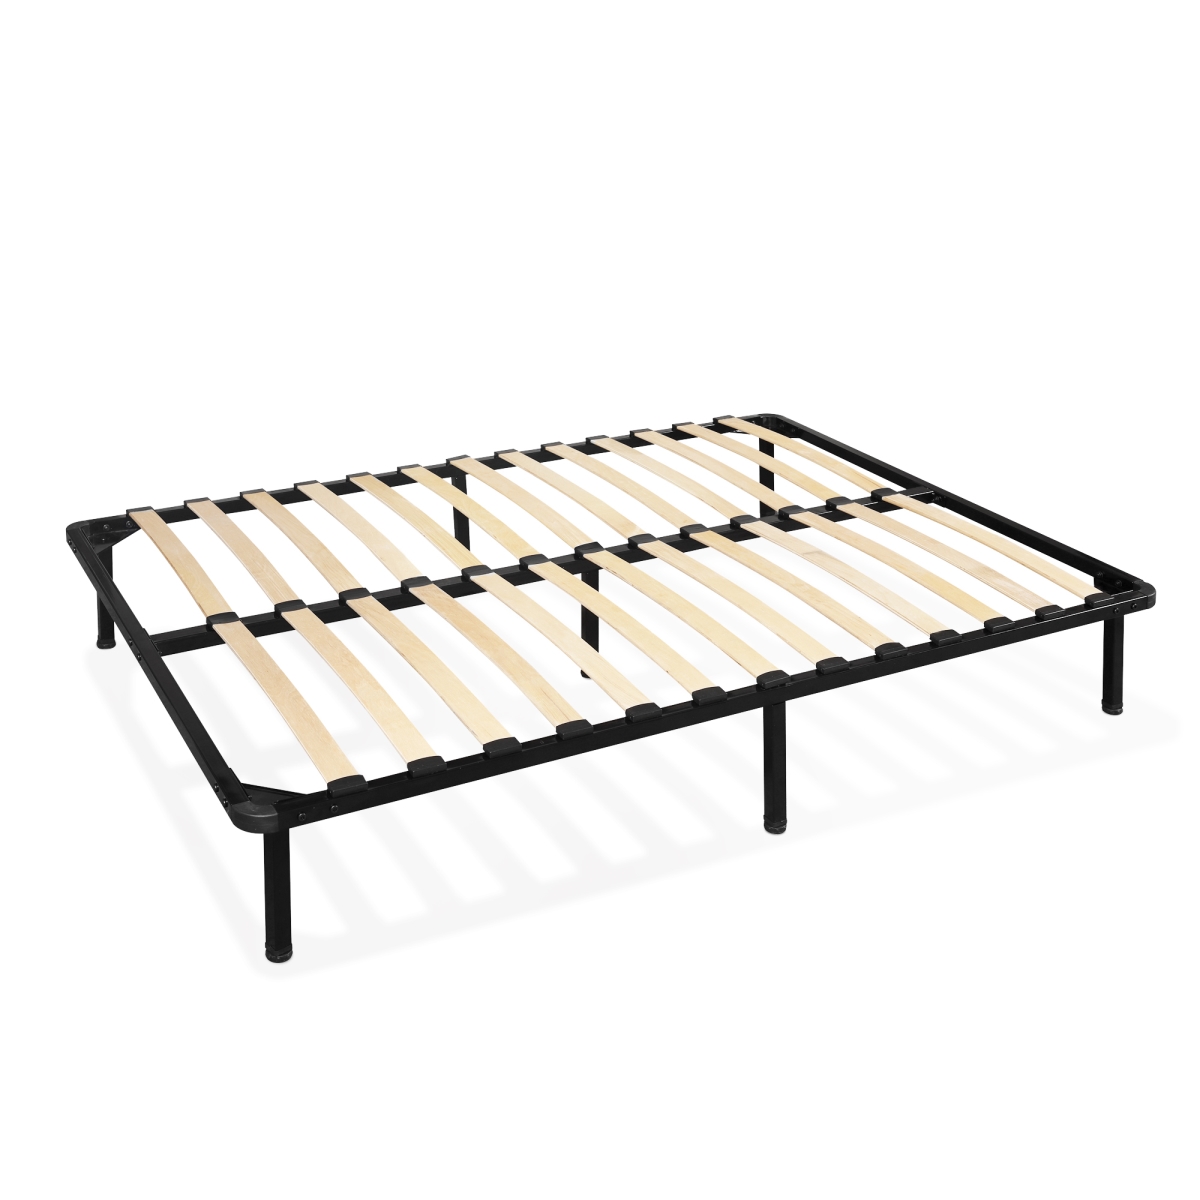 Fb3002f Angeland Cannet Metal Platform Bed Frame With Wooden Slats - Full Size